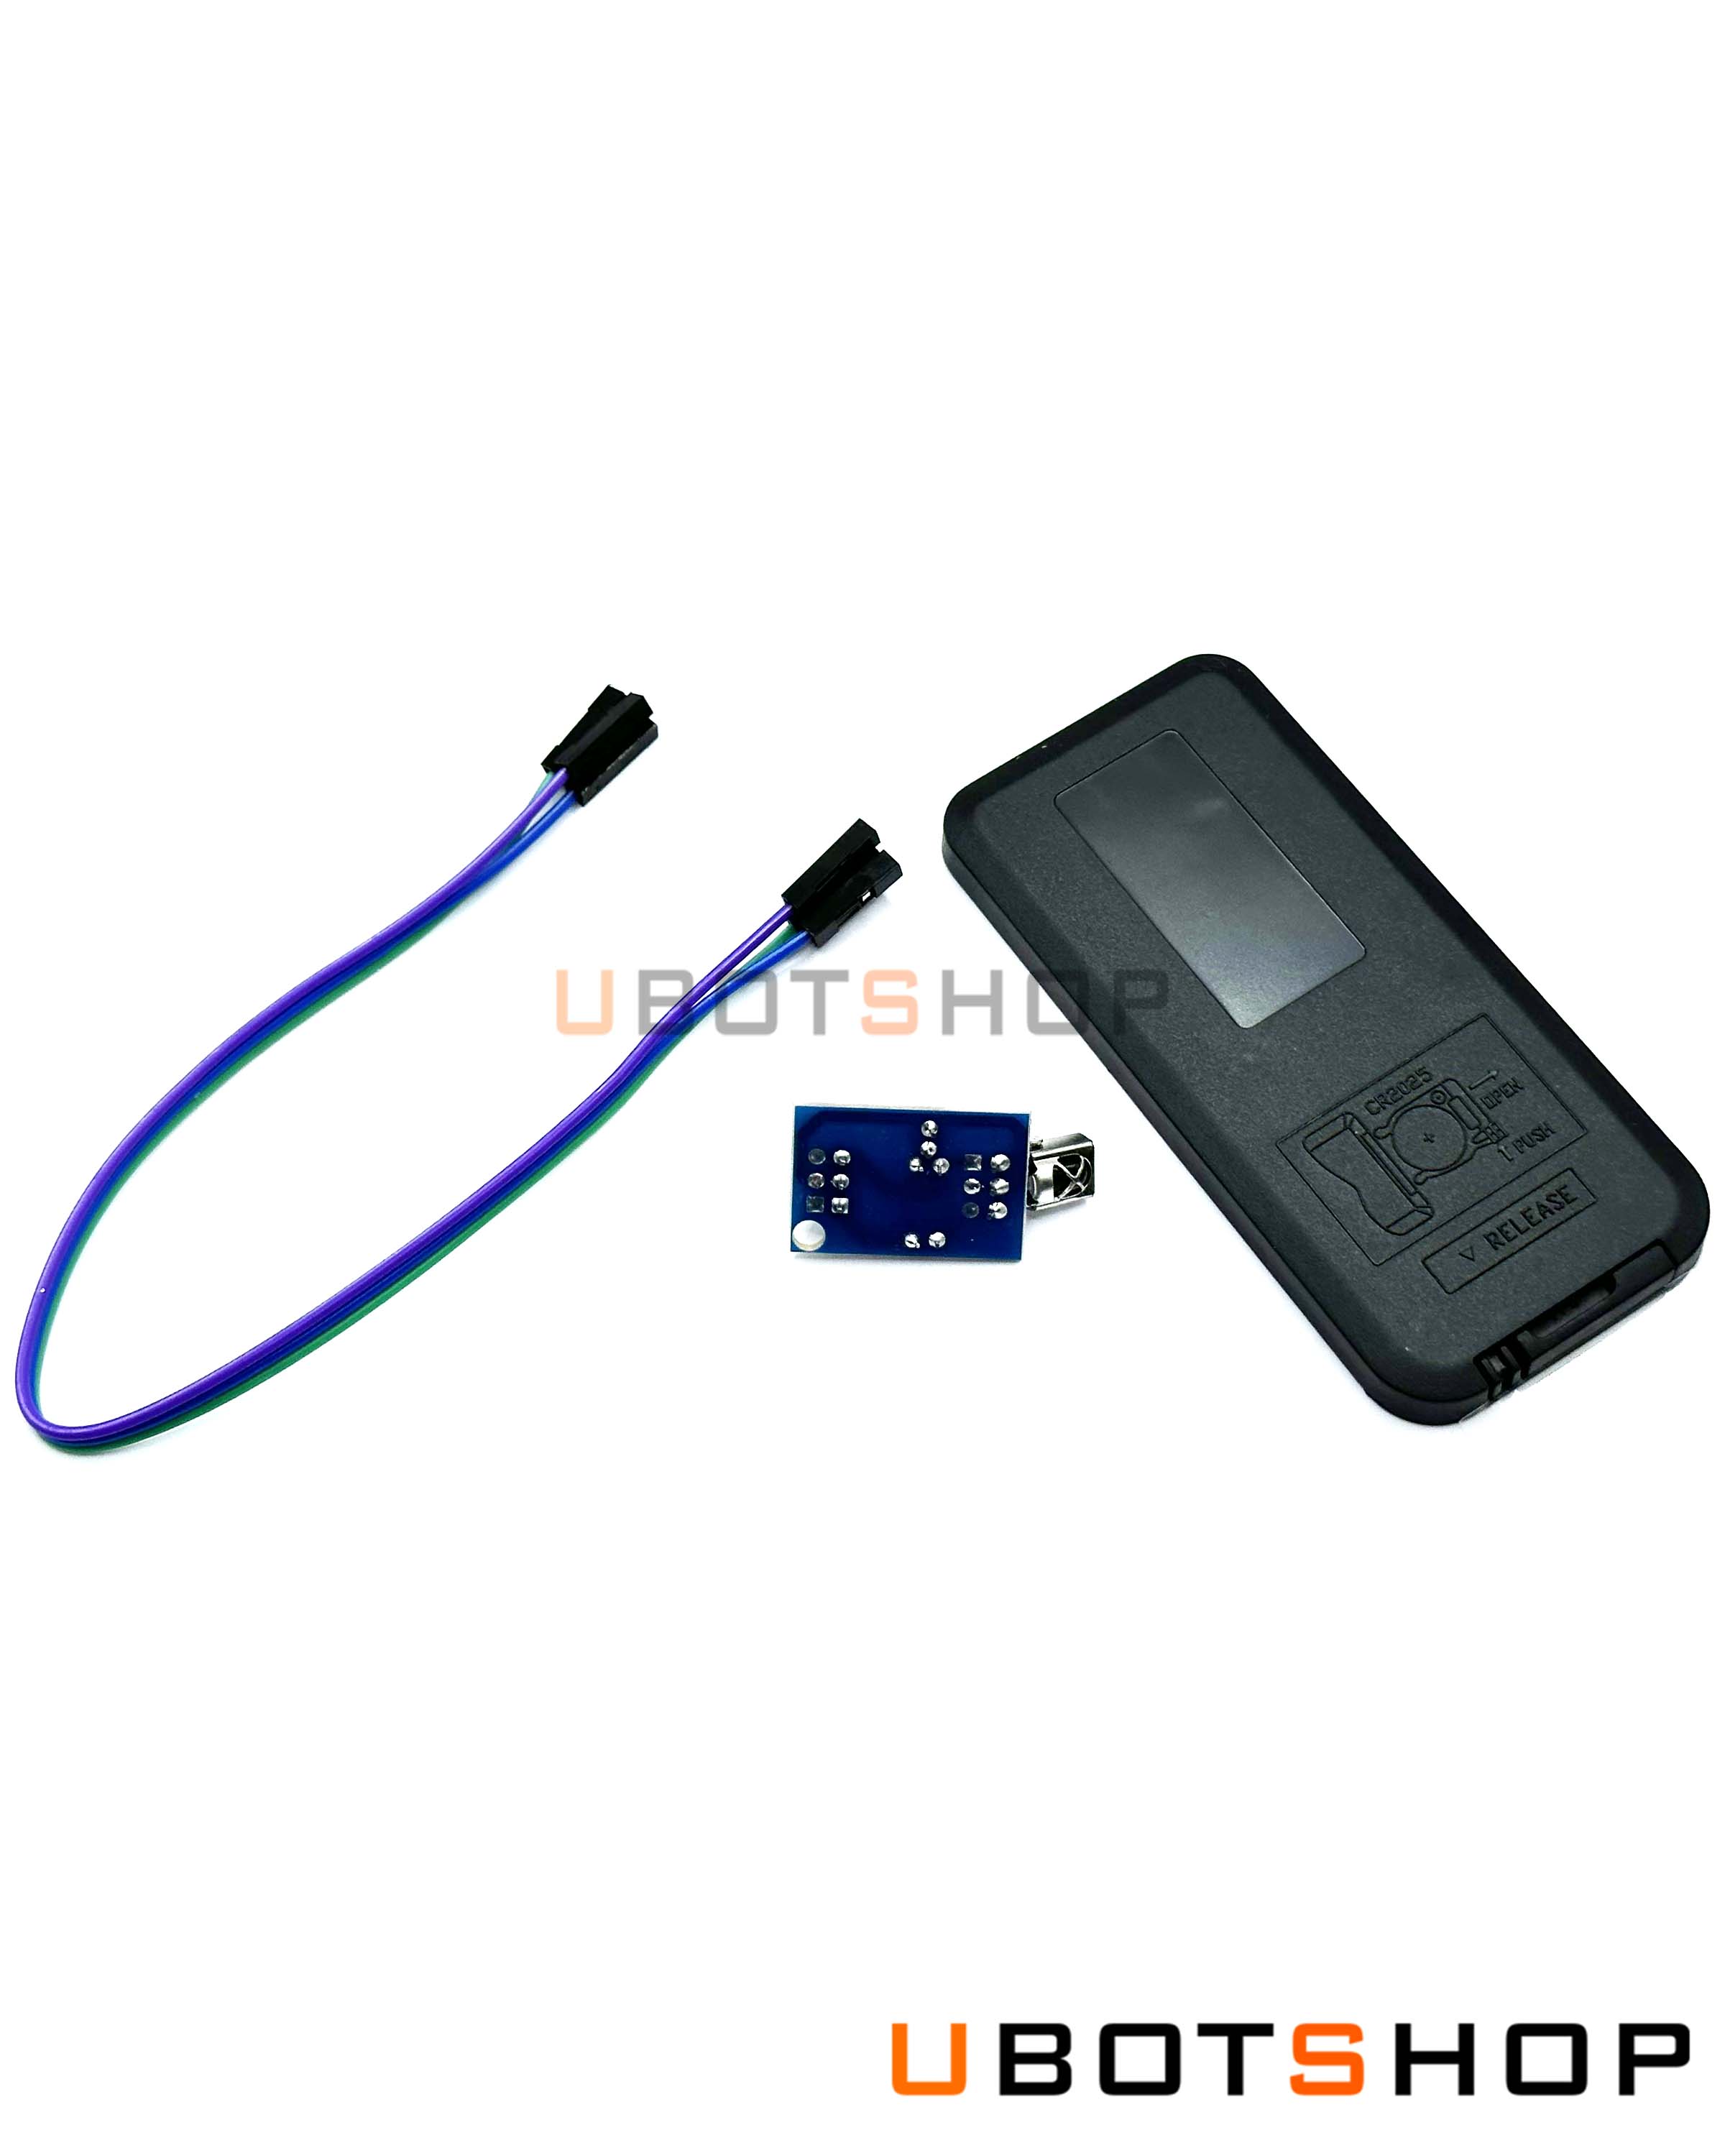 MCU HX1838 Infrared Wireless Remote Control Kit(MR0001)